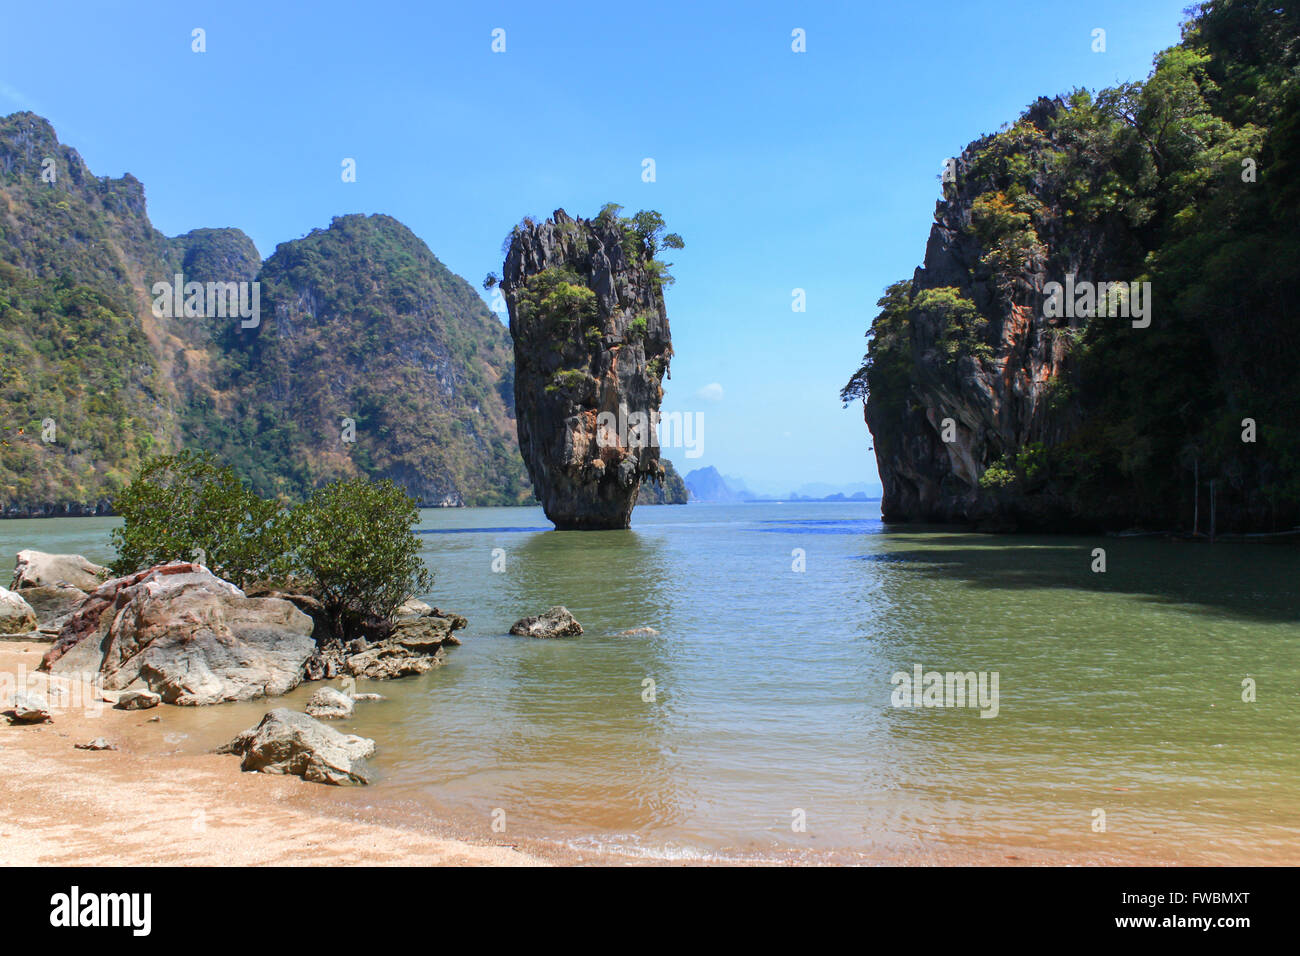 Ko Tapu or James Bond Island, Thailand. Land mark tourism in Thailand. Stock Photo